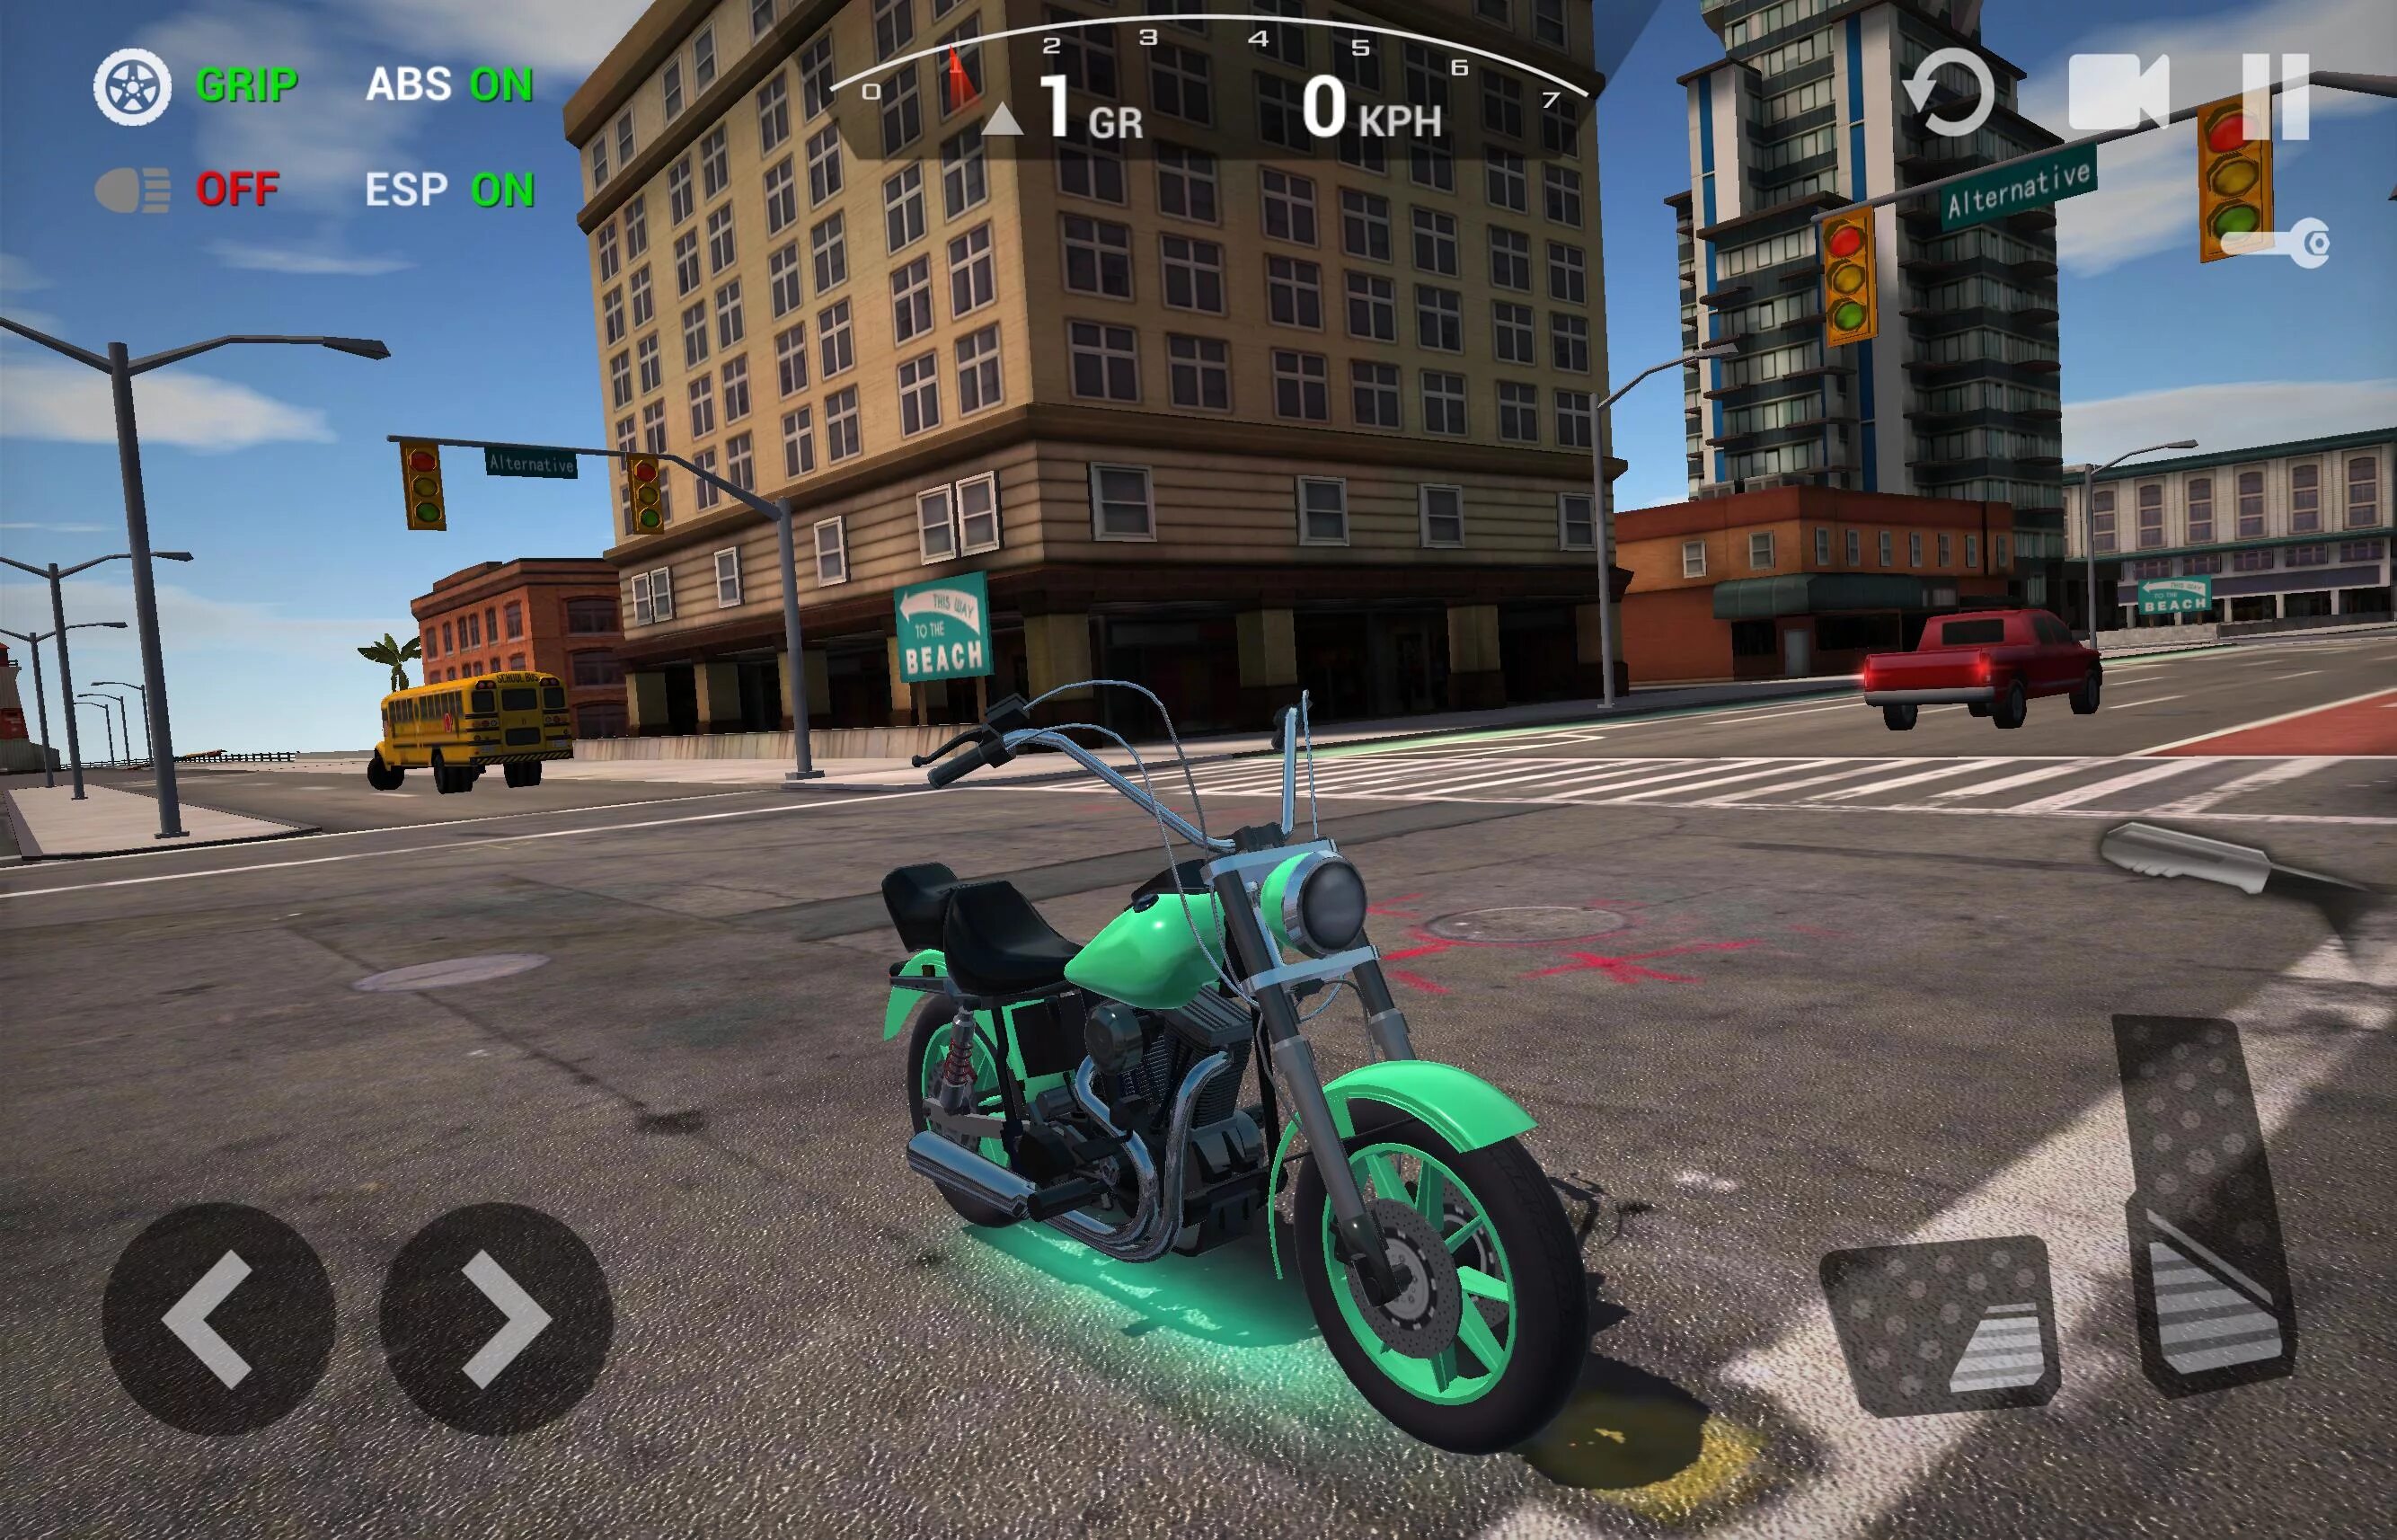 Игра где мотоцикл человек. Ультимейт мотоцикл симулятор. Ultimate Motorcycle Simulator андроид. Мото игры на андроид. Гонки по городу на мотоциклах.